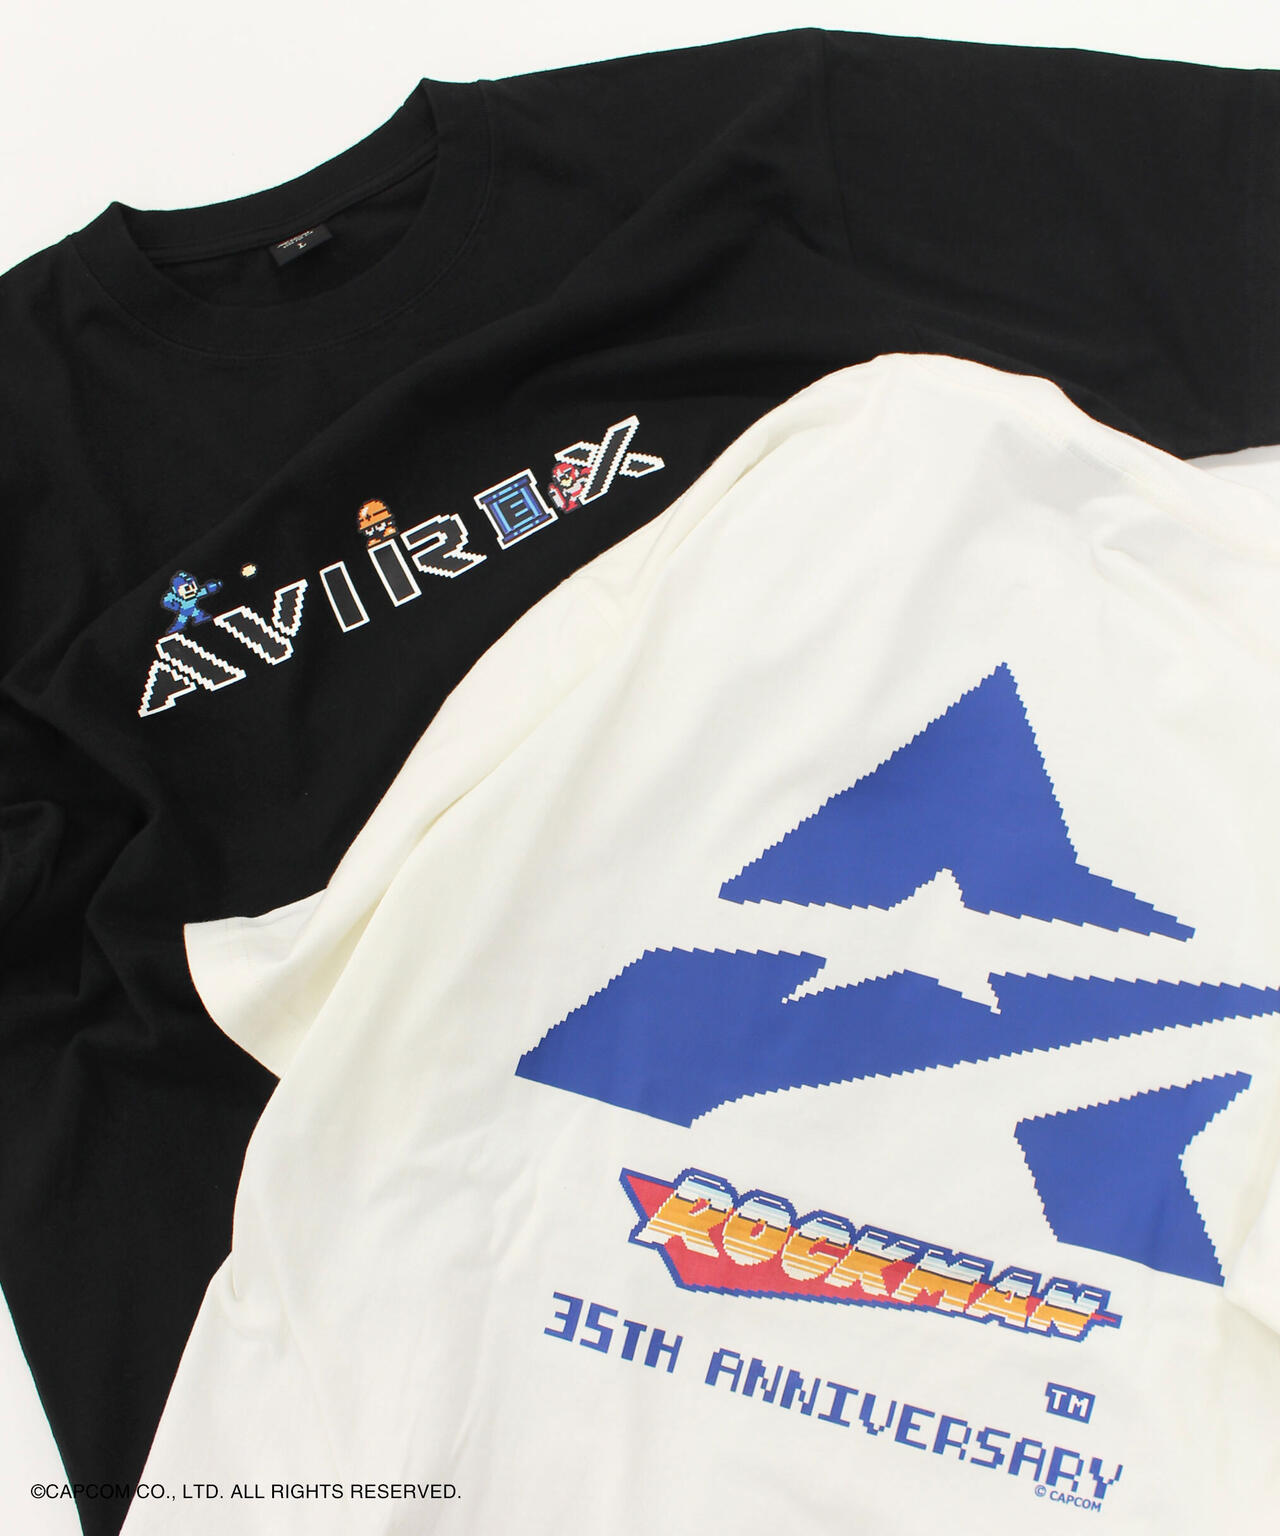 《ROCKMAN×AVIREX》ロックマン 35th Tシャツ / ROCKMAN 35th T-SHIRT